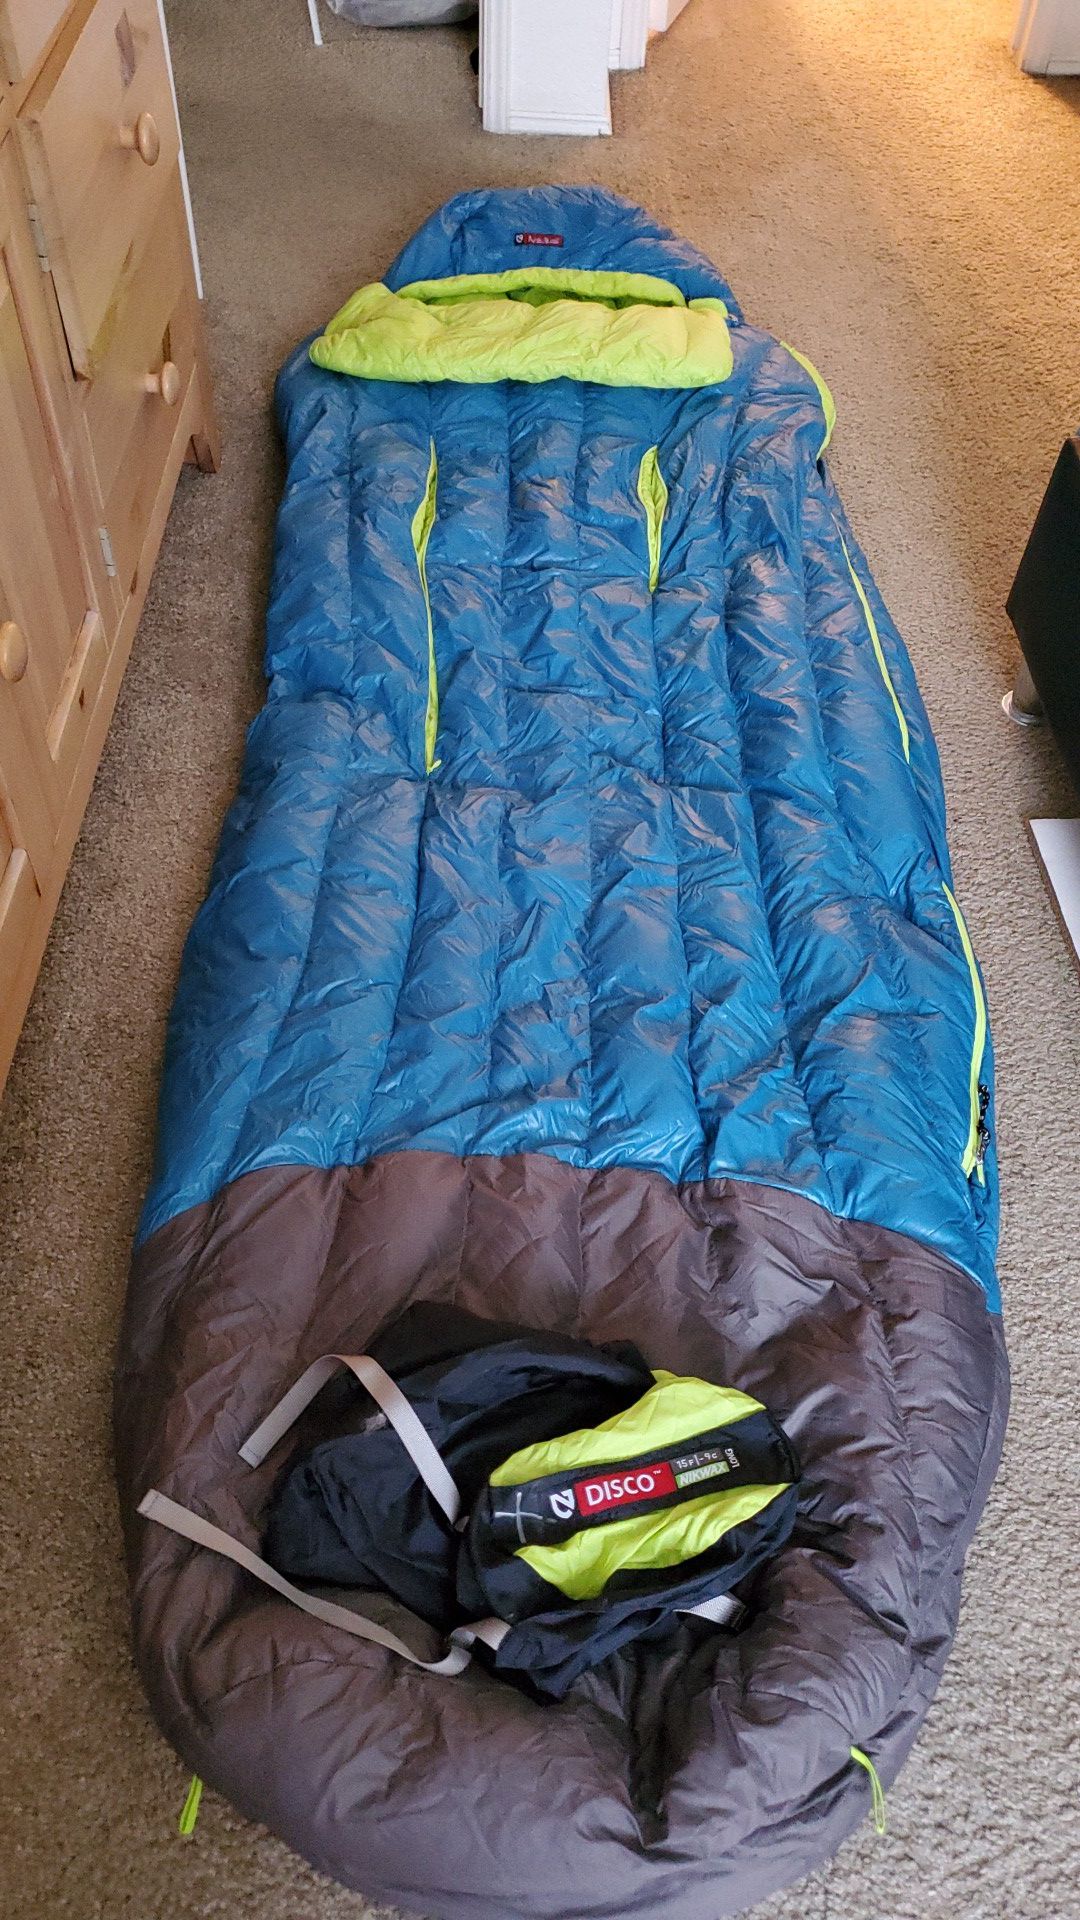 Nemo/disco waterproof sleeping bag